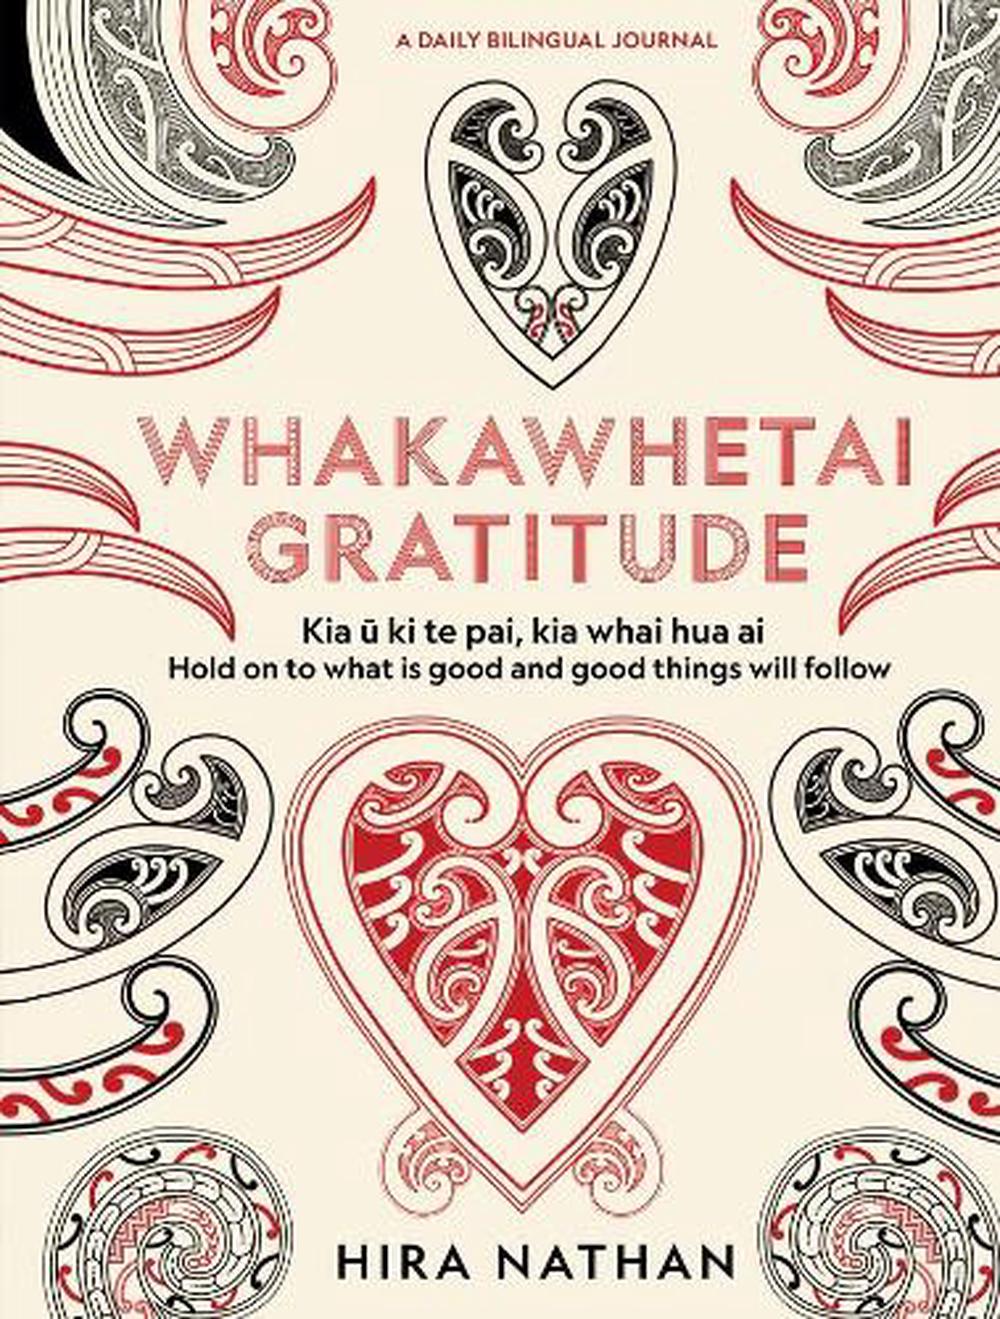 Whakawhetai Gratitude Journal - Rivendell Shop